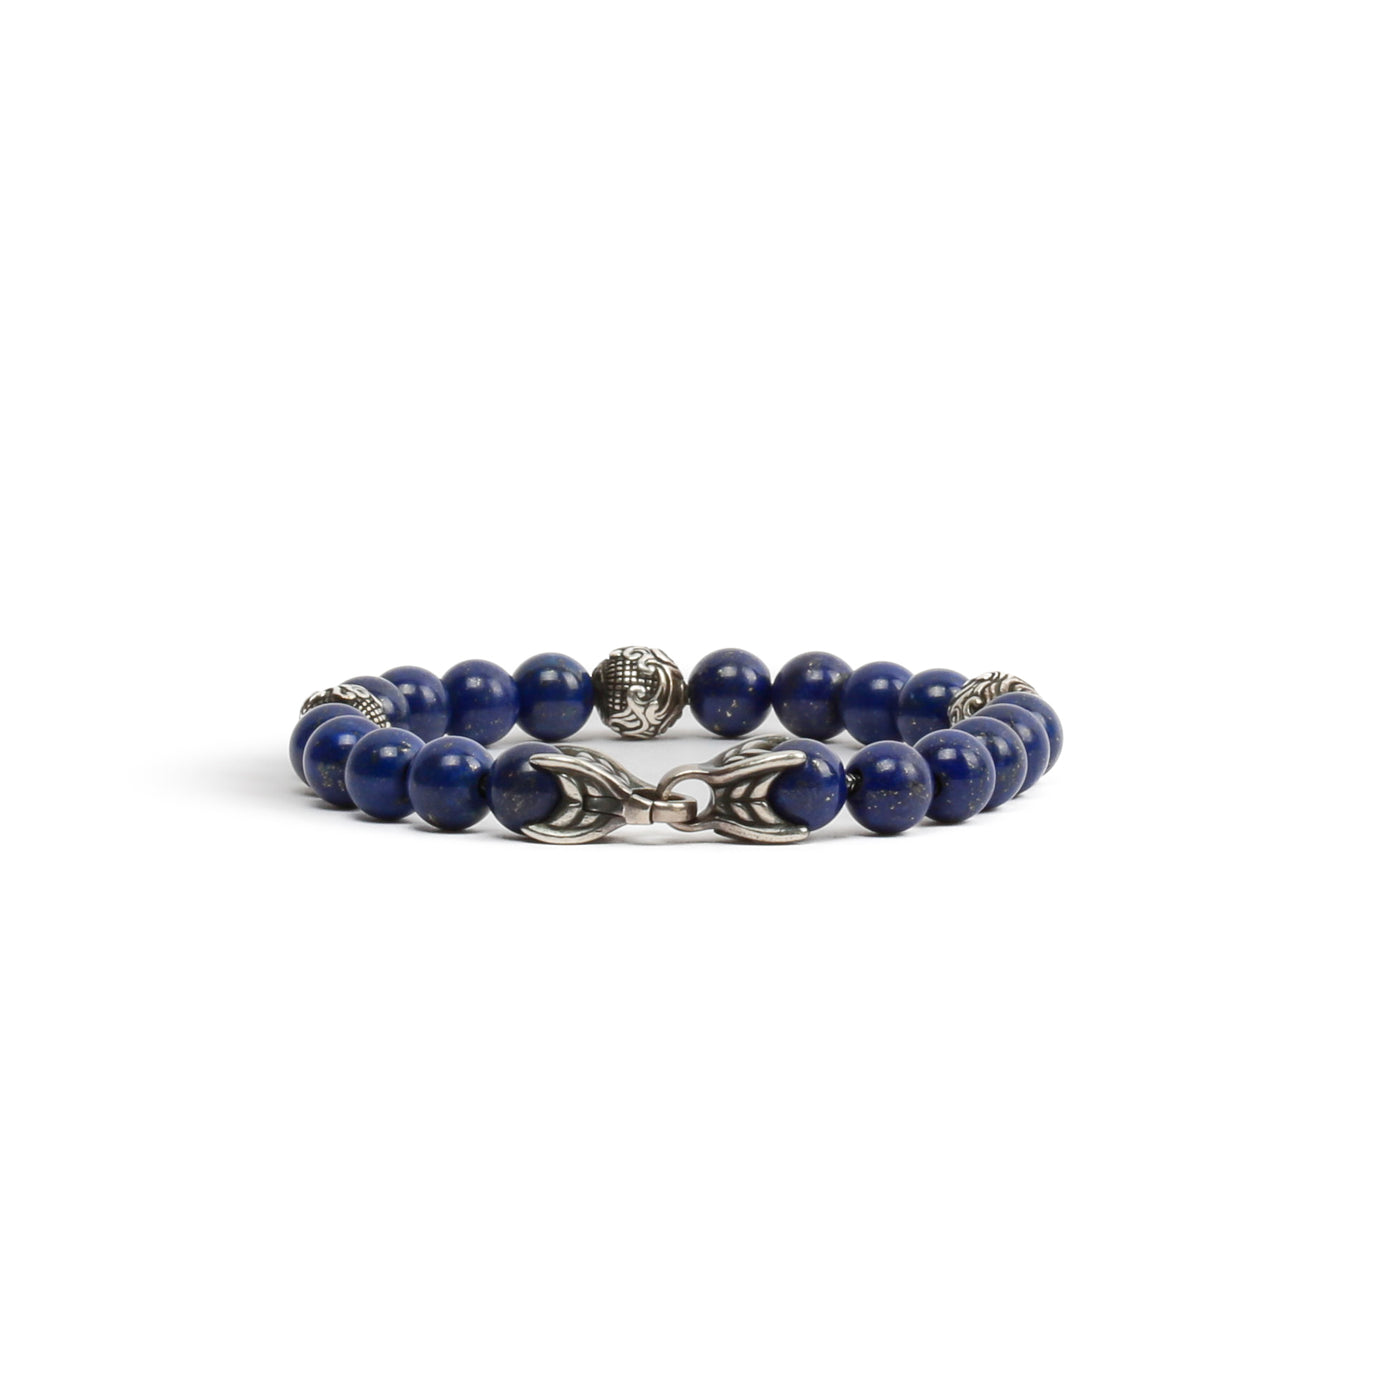 DAVID YURMAN Lapis Lazuli Spiritual Bead Bracelet - FINAL SALE